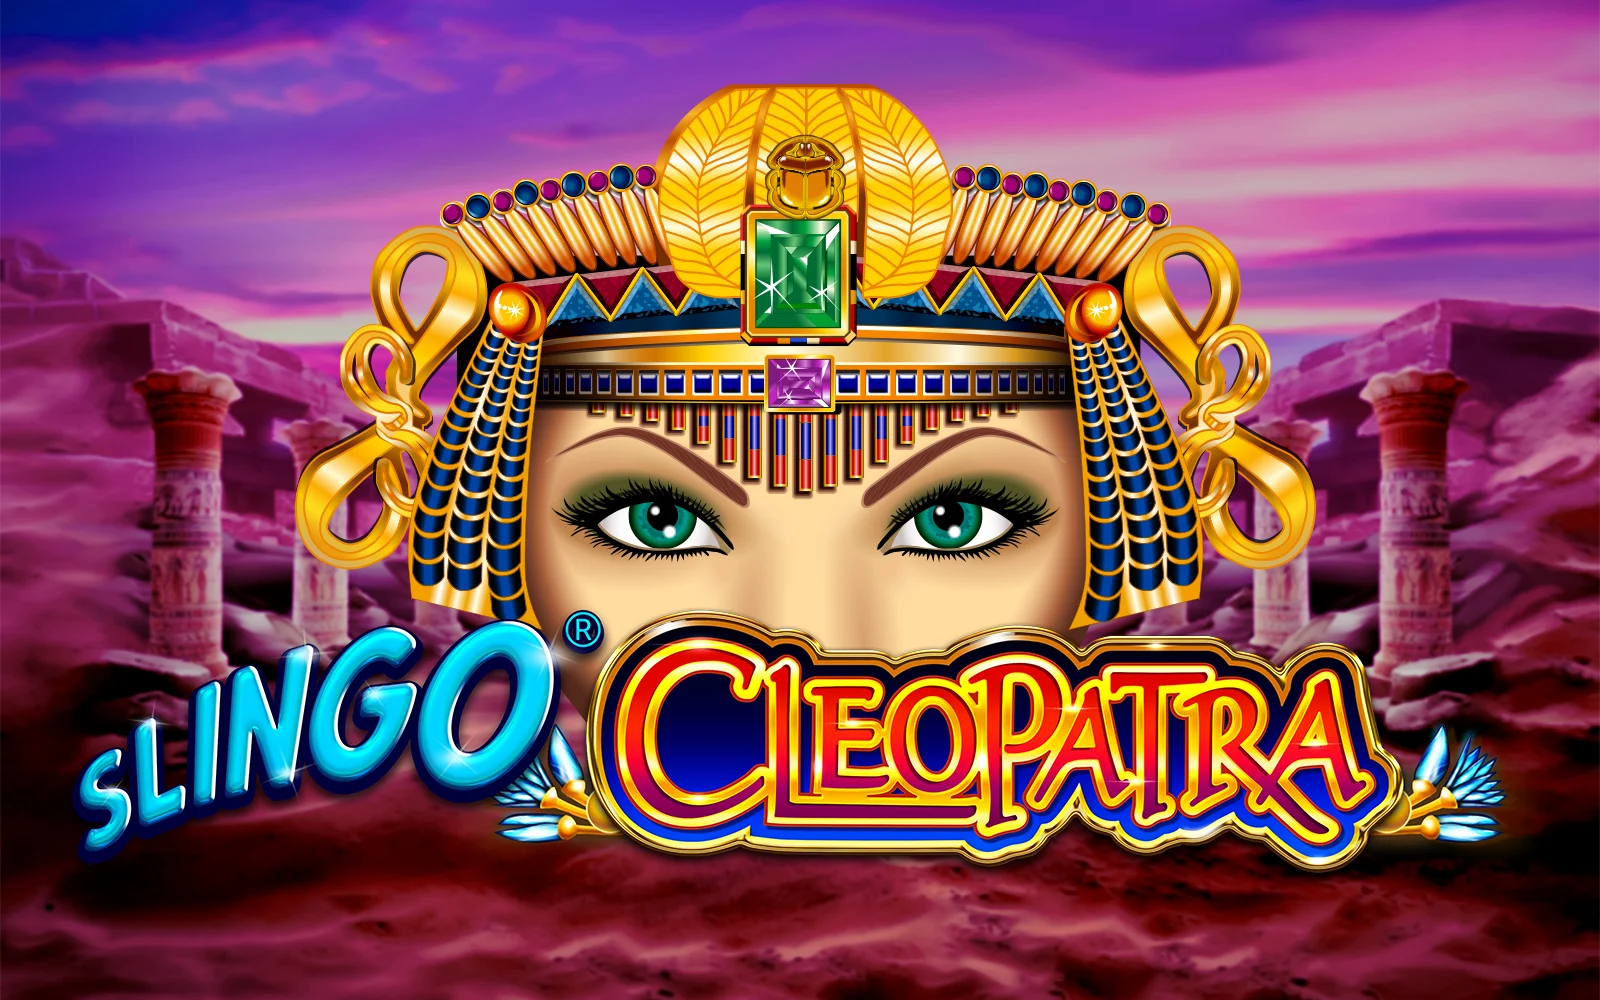 Gioca a Slingo Cleopatra sul casino online Starcasino.be